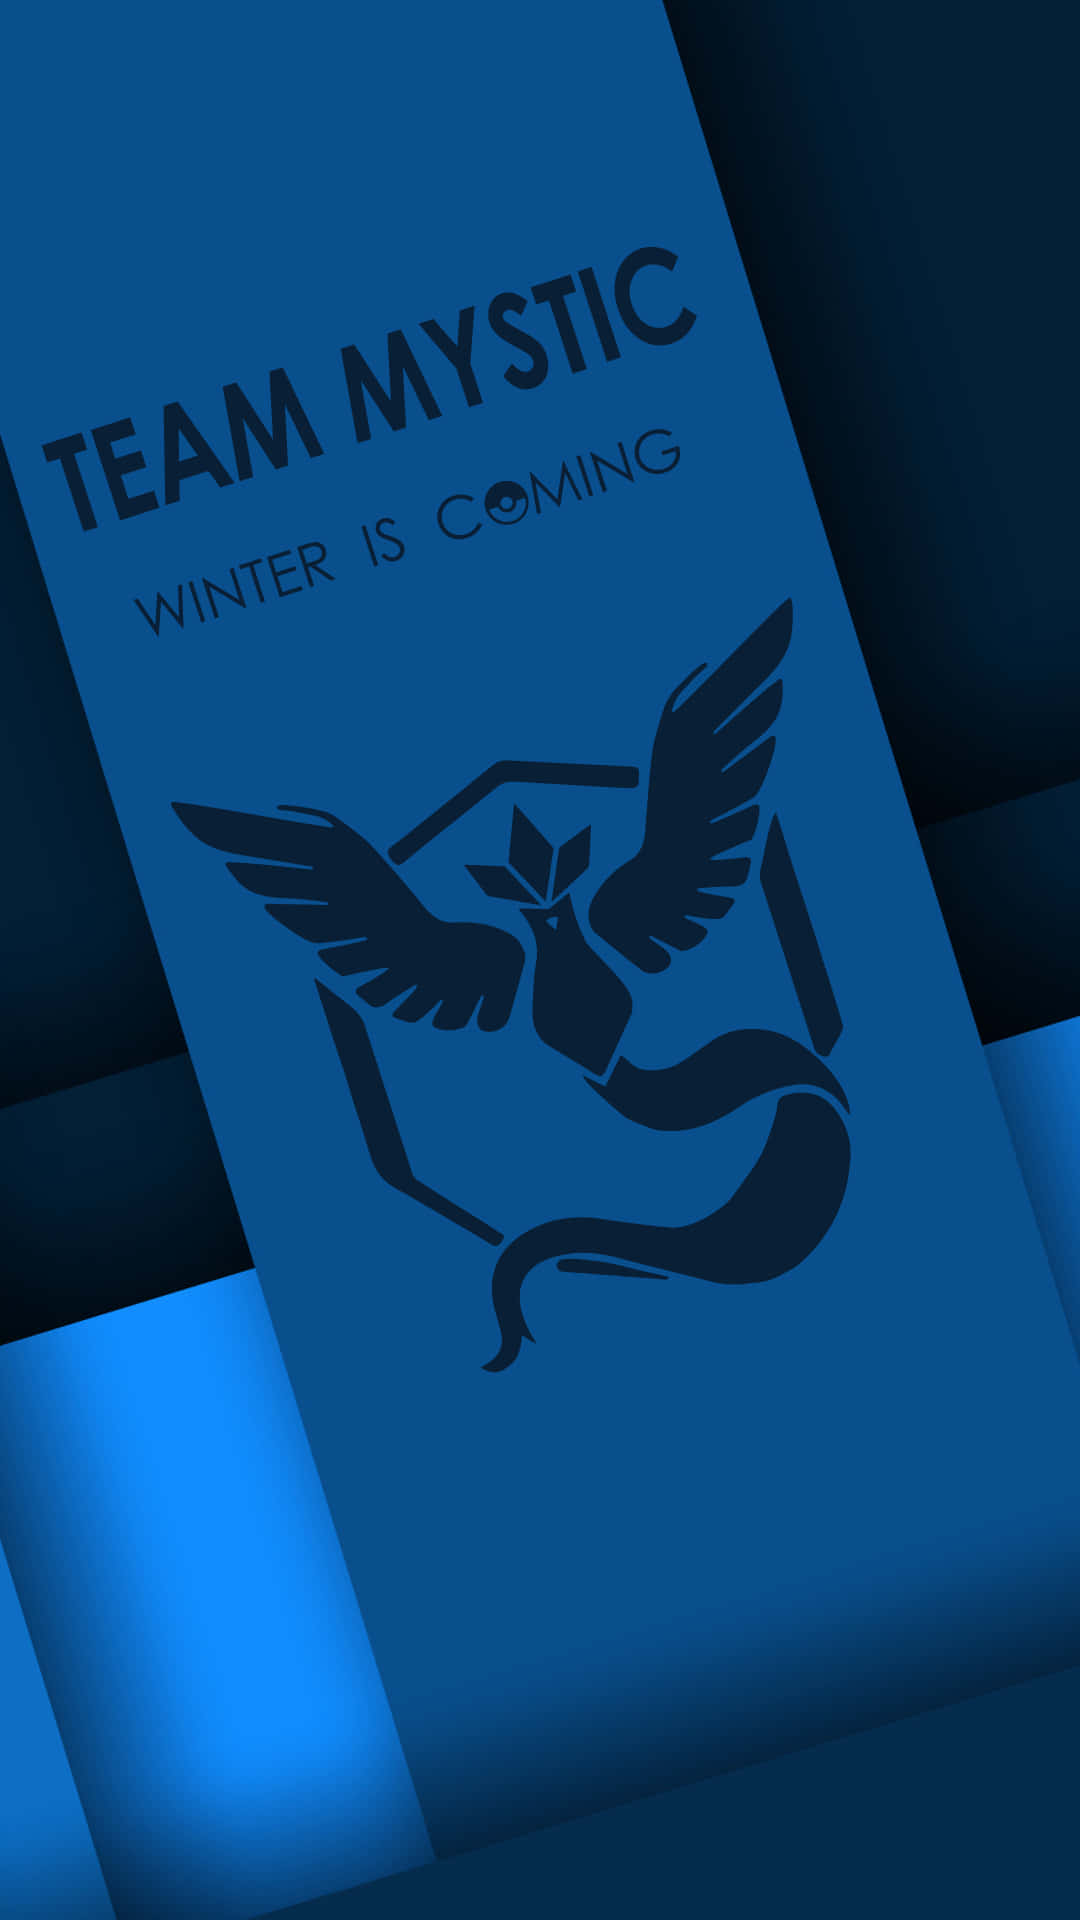 Teammystic Winter Kommt Wallpaper Wallpaper